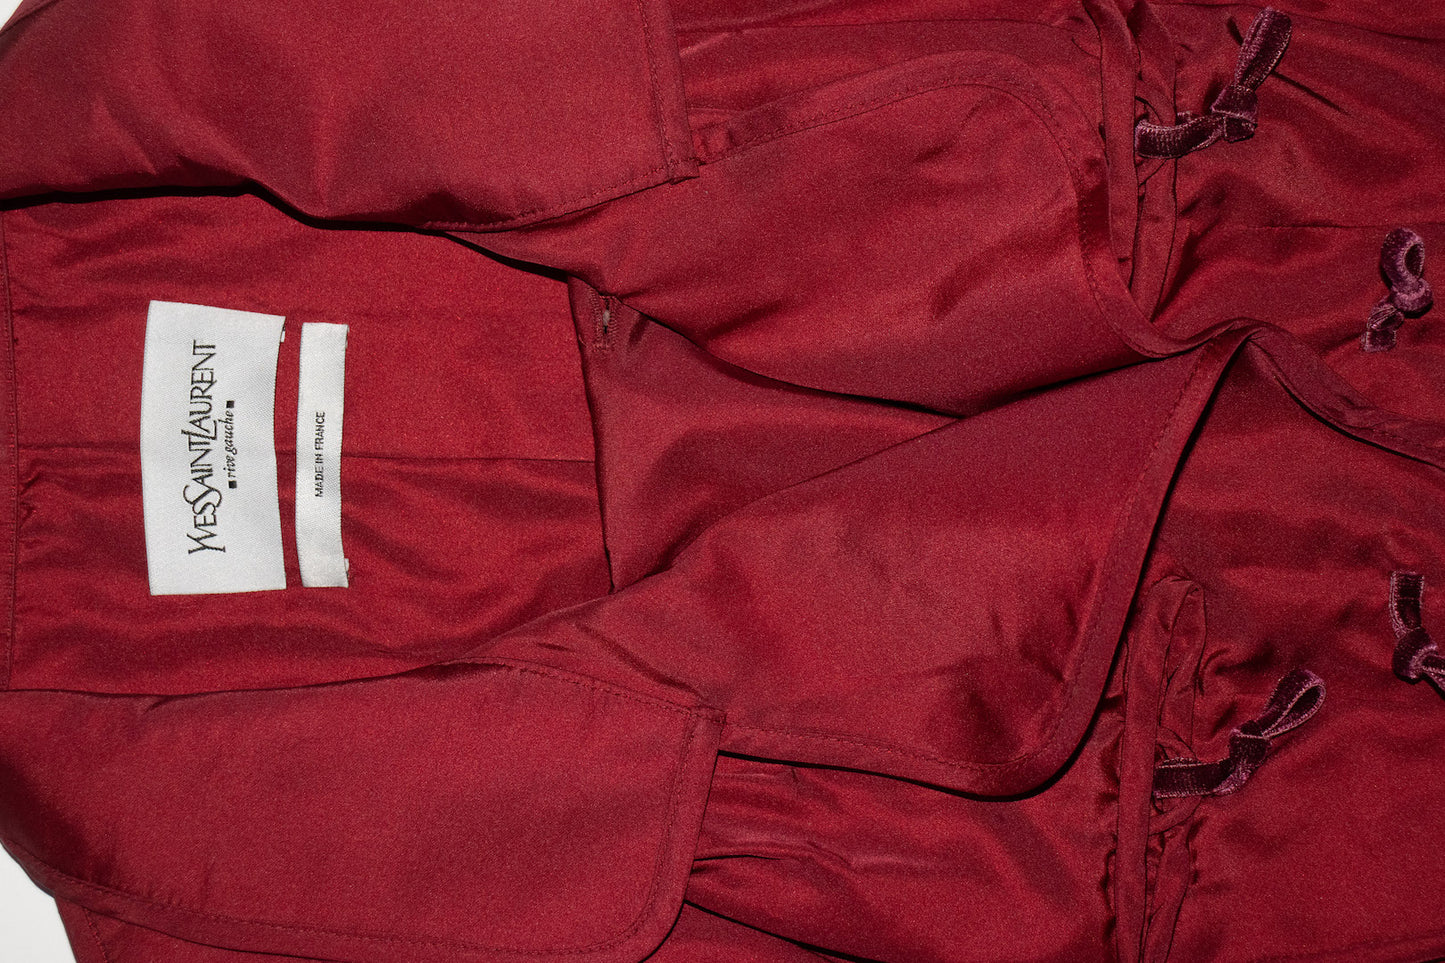 Yves Saint Laurent burgundy jacket